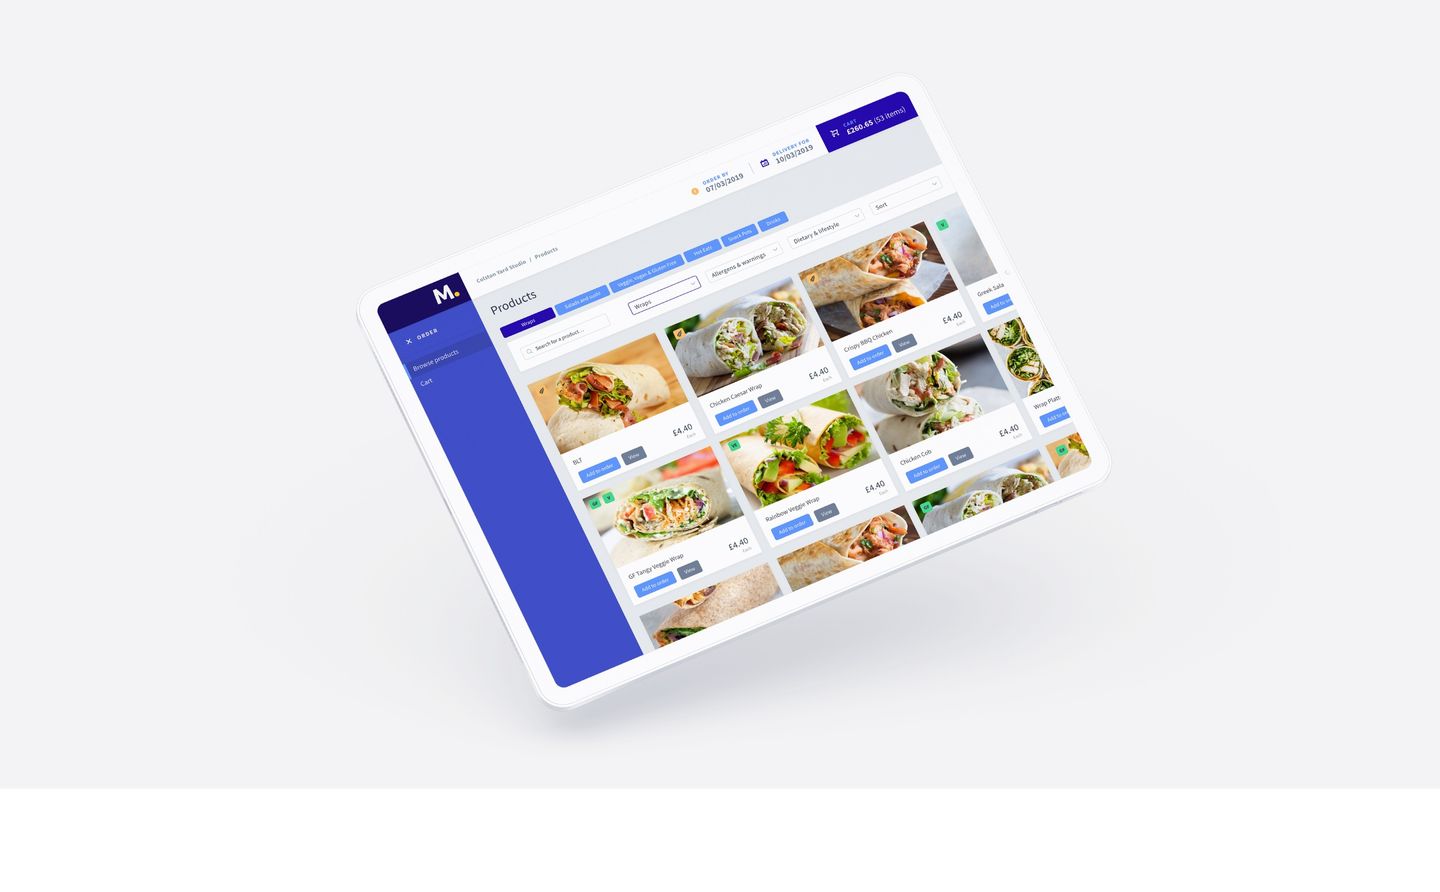 Mezze food-to-go ordering platform on an iPad